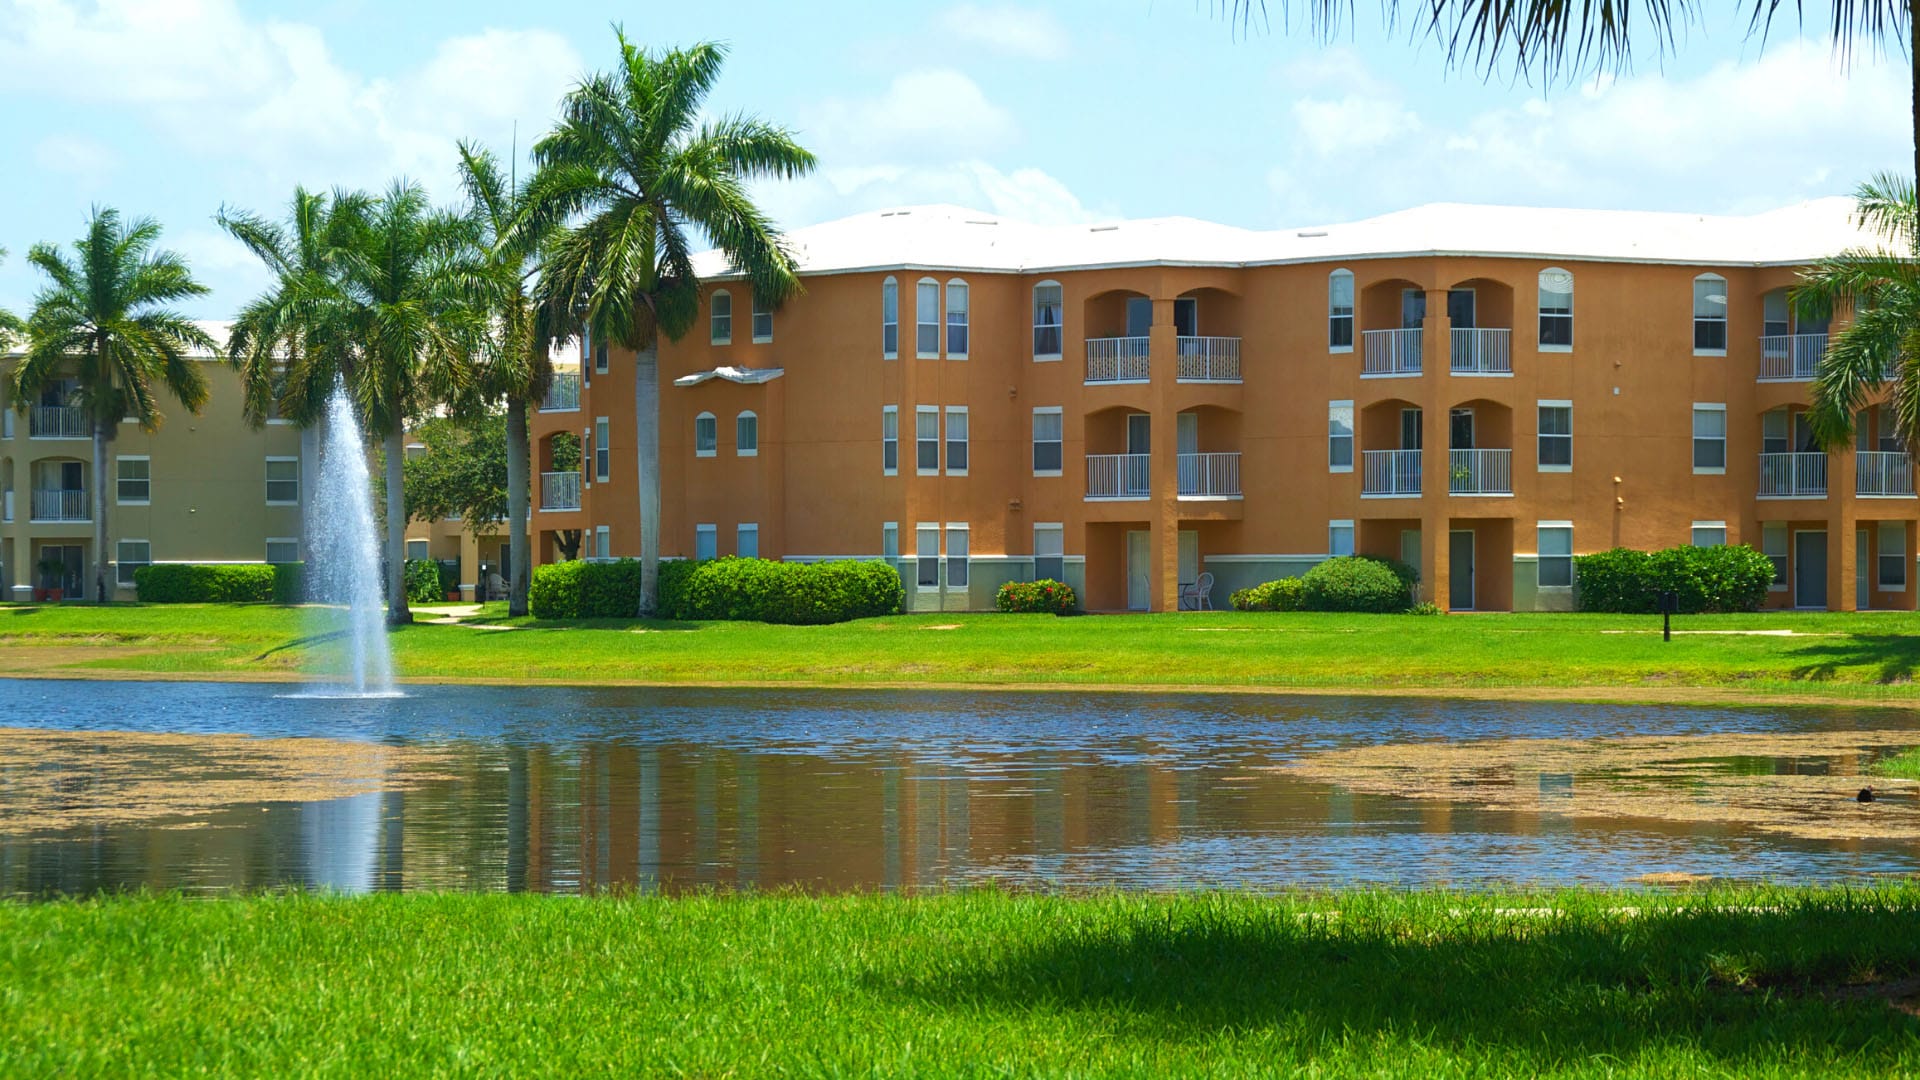 Image of Florida Apartment building